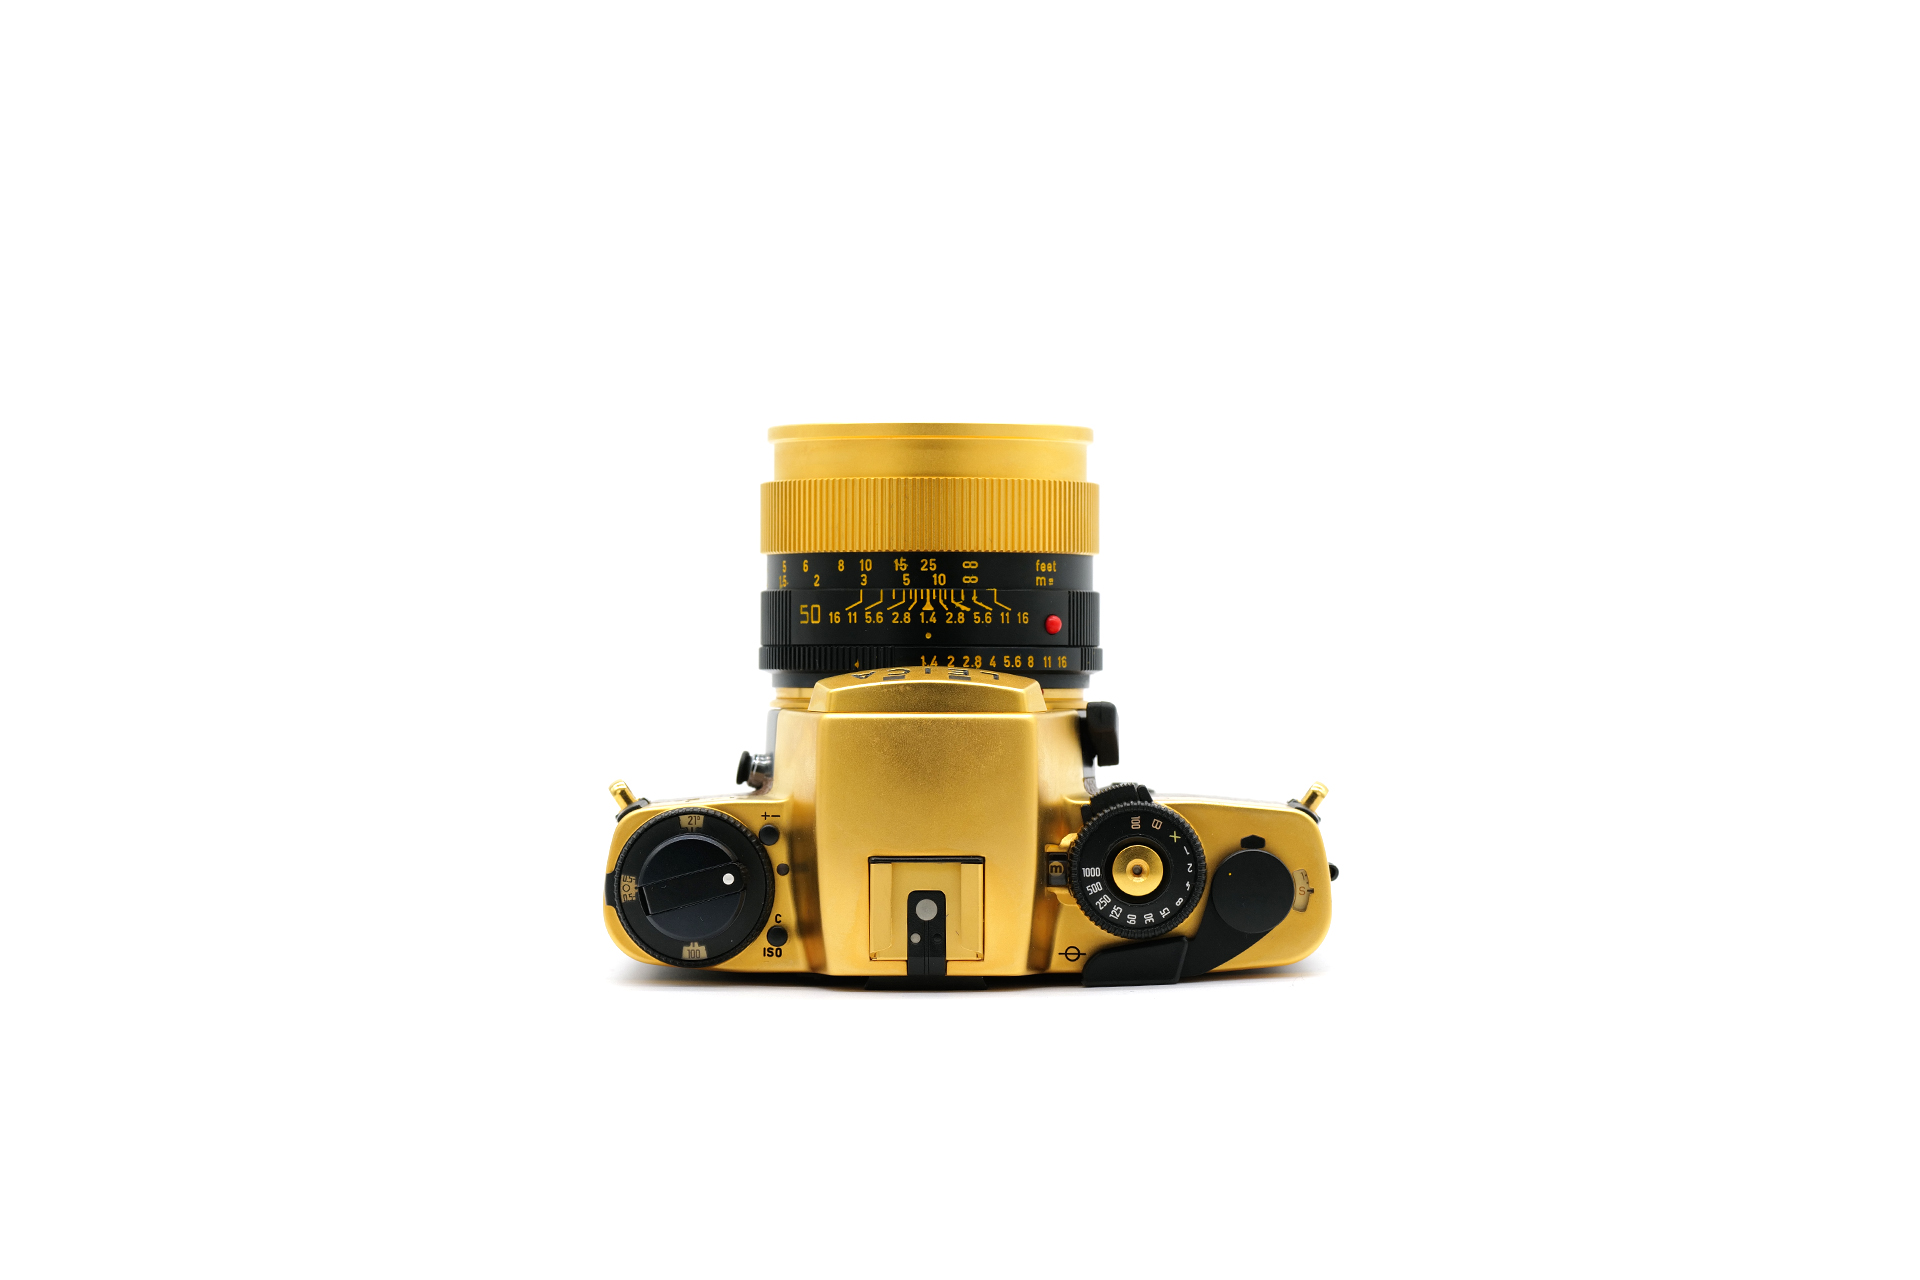 Leica R4 Gold Leather + Summilux 50 1.4 R Gold